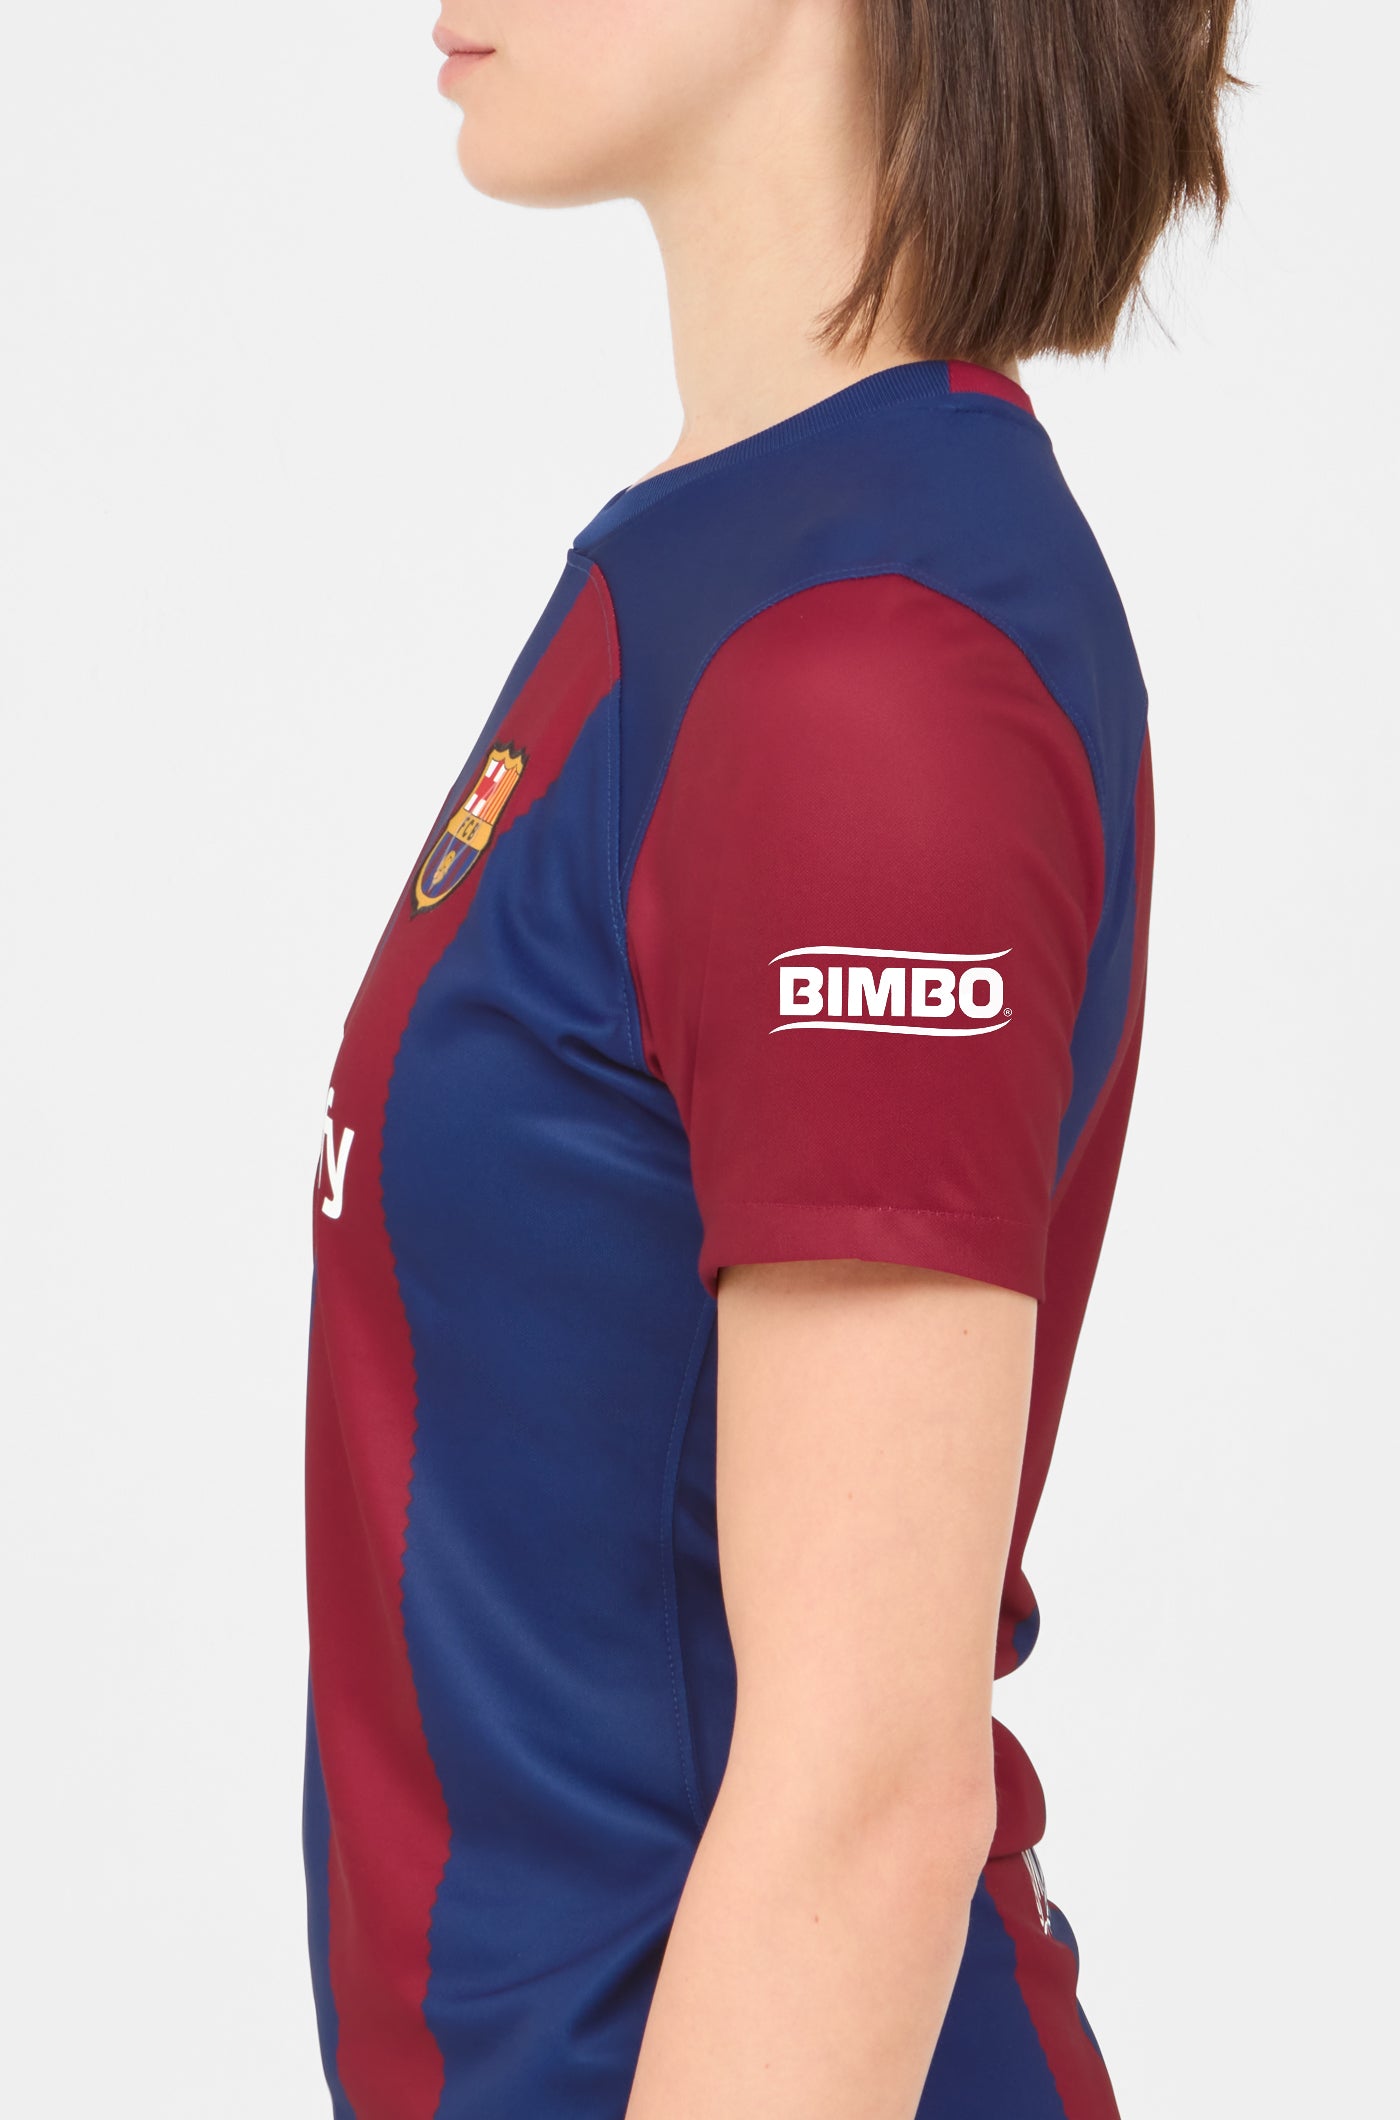 LFP FC Barcelona home shirt 23/24 – Barça Official Store Spotify Camp Nou